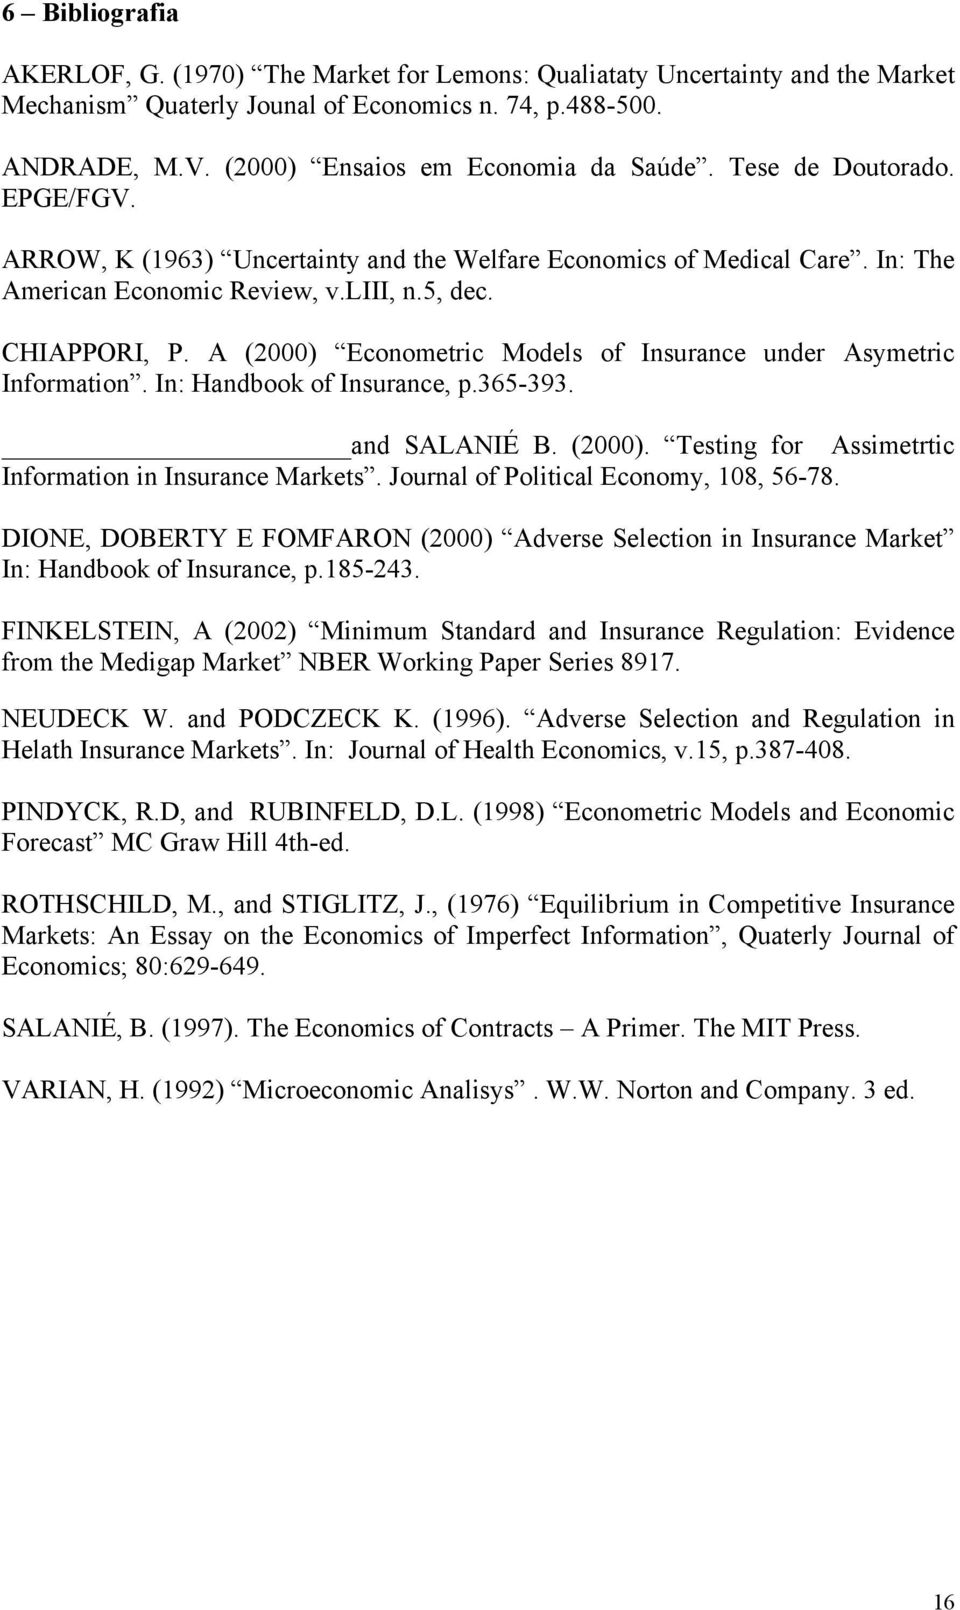 A (2000) Ecoometric Models of Isurace uder Asymetric Iformatio. I: Hadbook of Isurace, p.365-393. ad SALANIÉ B. (2000). Testig for Assimetrtic Iformatio i Isurace Markets.